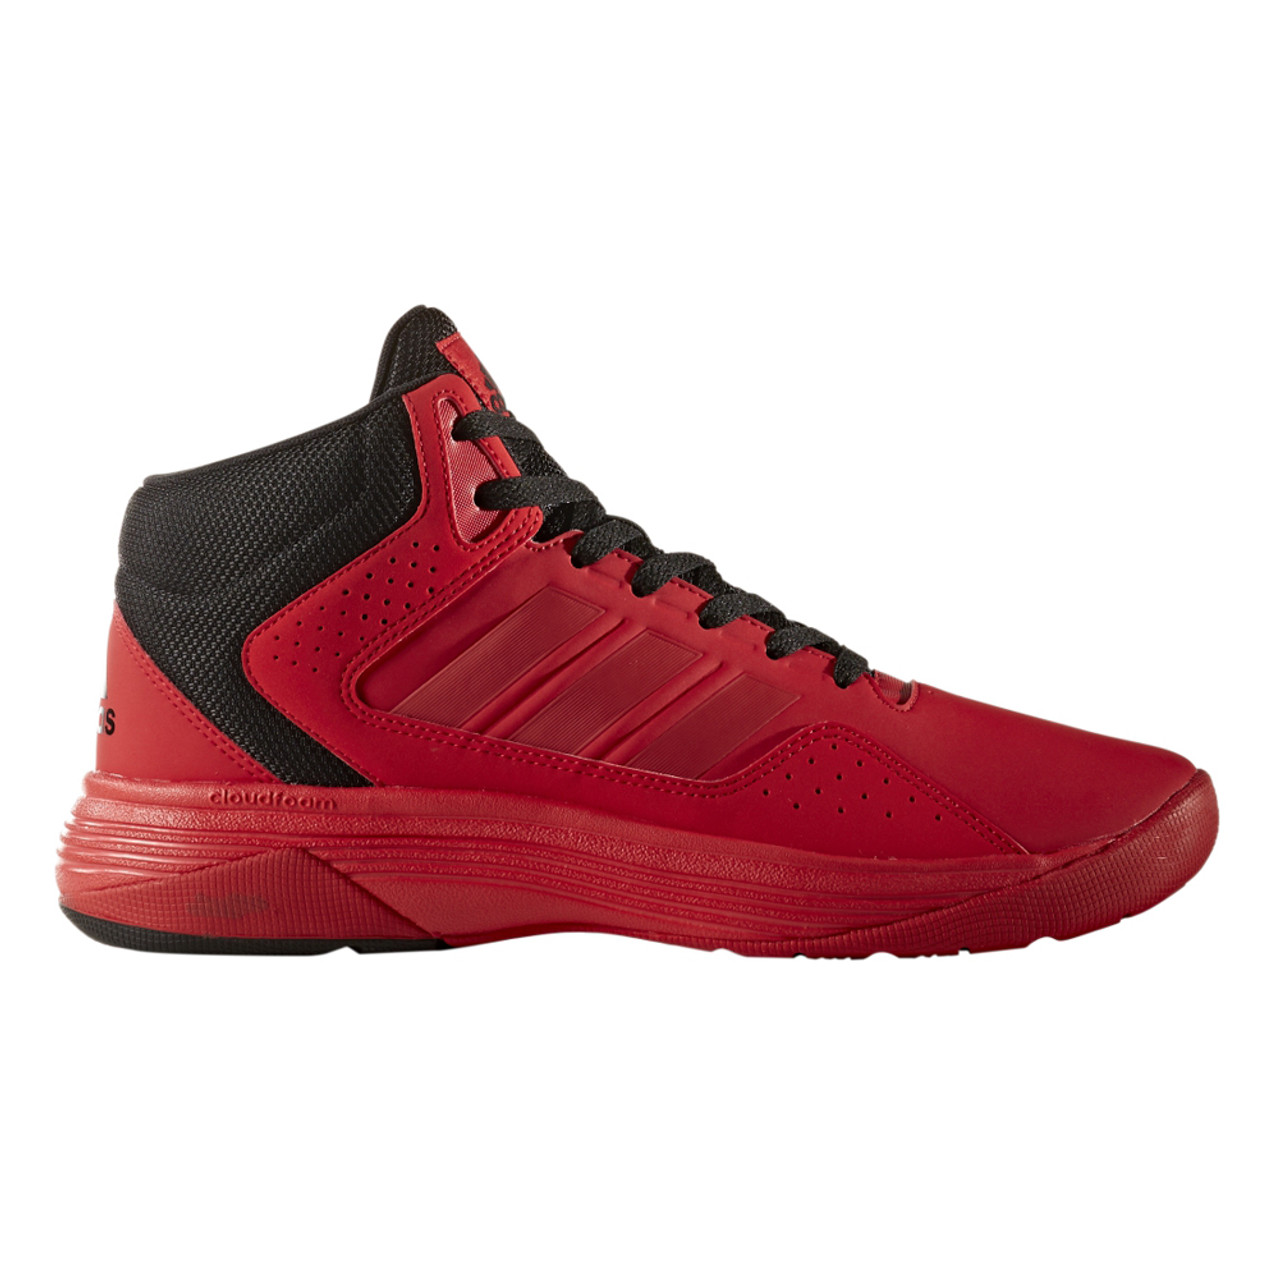 Realmente nuez Hasta Adidas Men's Cloudfoam Ilation Mid Basketball Shoe - Red | Discount Adidas  Men's Athletic Shoes & More - Shoolu.com | Shoolu.com